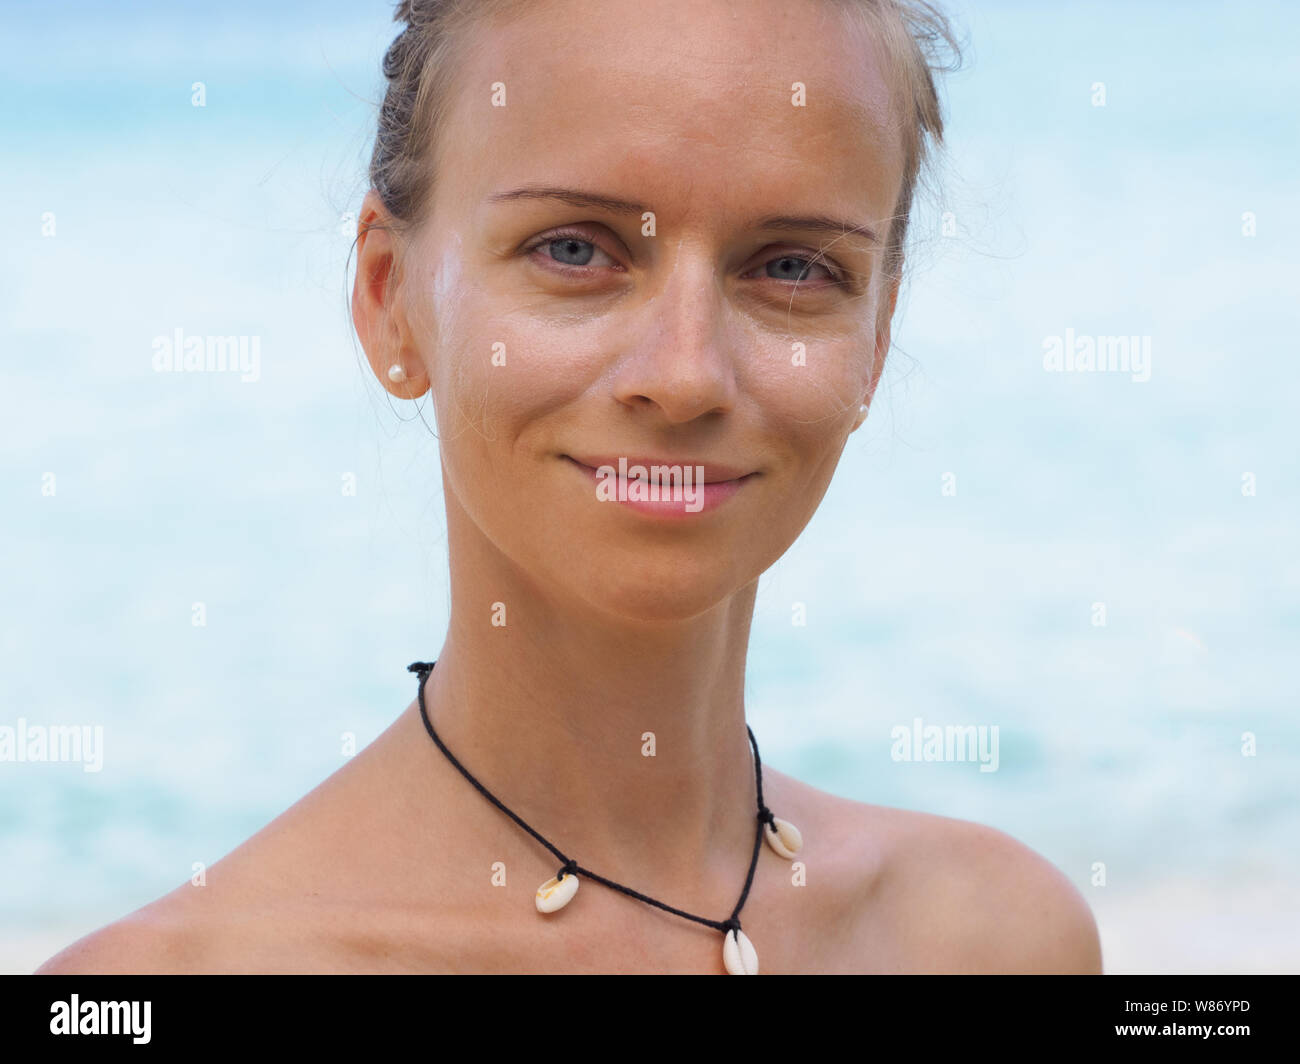 Portrait Of A Beautiful Slim Girl Wearing A Bikini Puts On Her Face